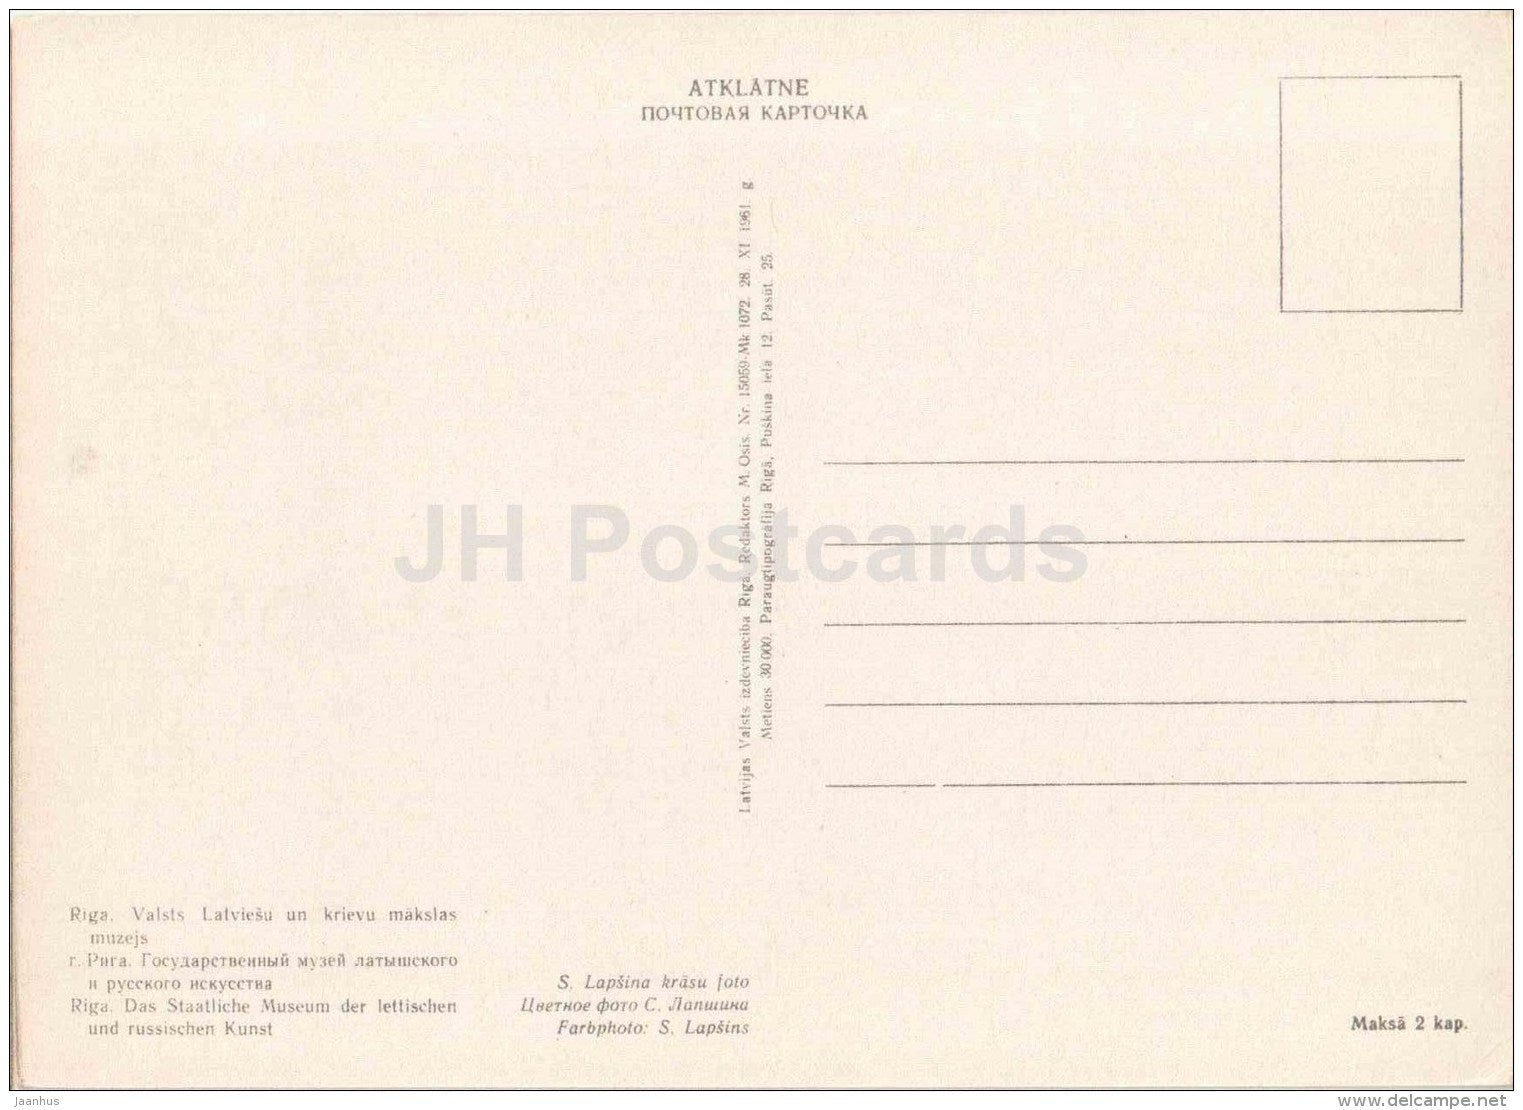 State Museum of Latvian and Russian Art - Riga - 1961 - Latvia USSR - unused - JH Postcards